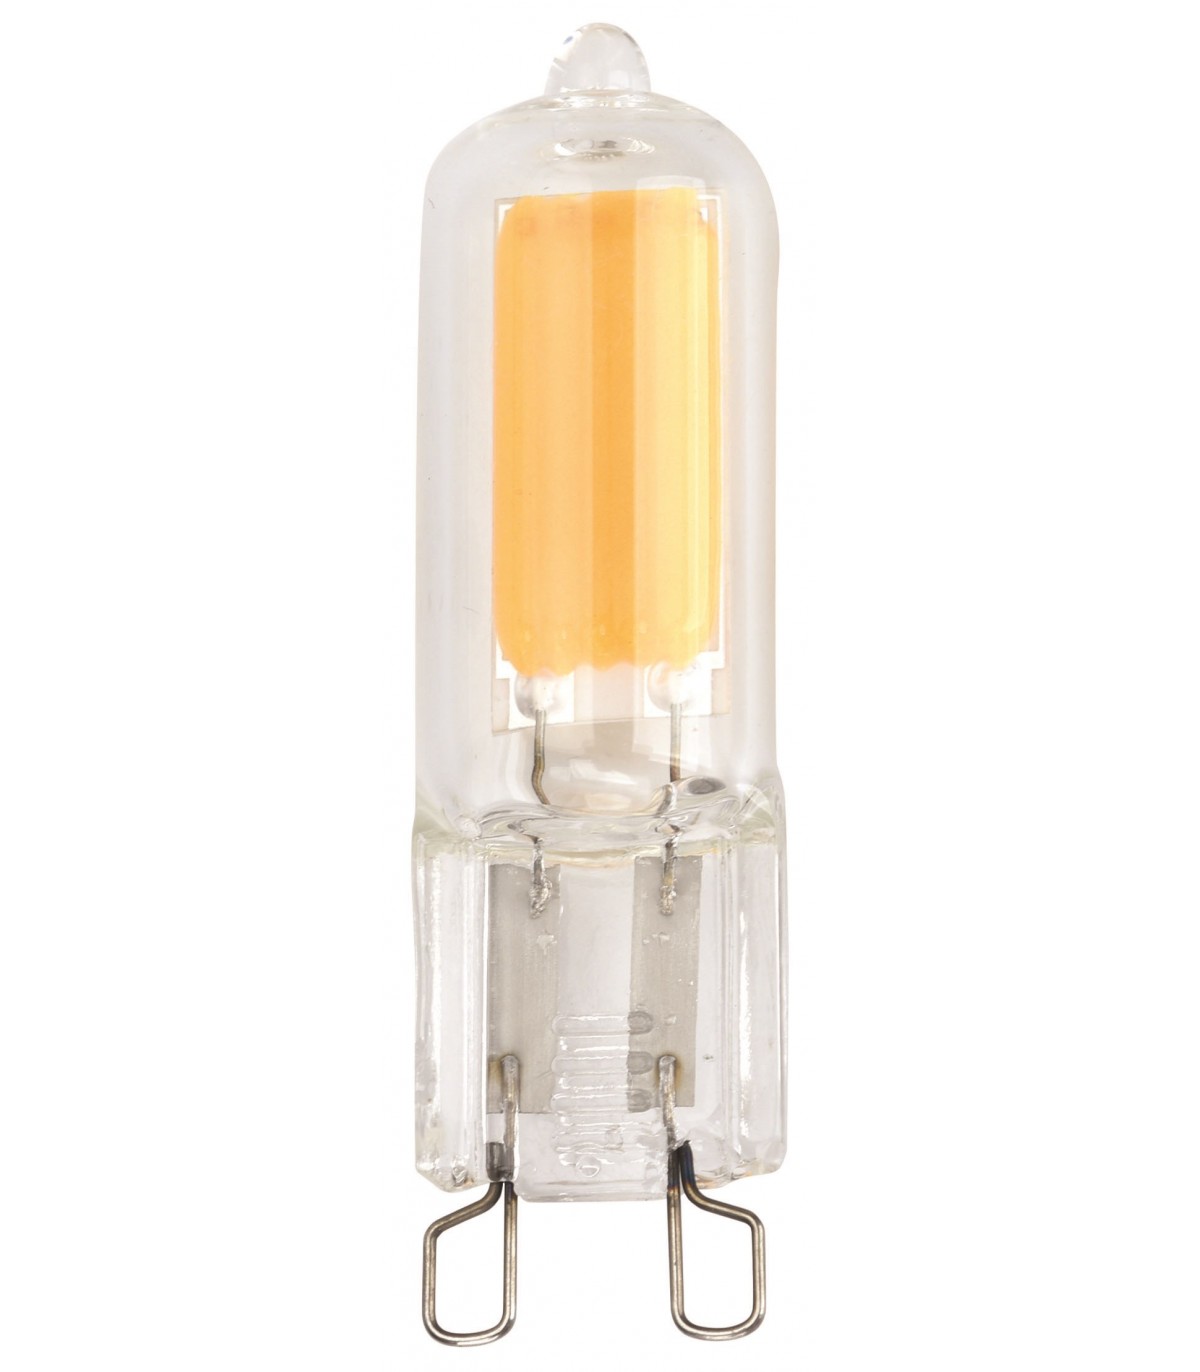 Ampoule Halogene G9 28W 230V, 370LM 2700K Blanc Chaud Dimmable, G9 Ampoules  Capsule, pour Lustres, Lampes